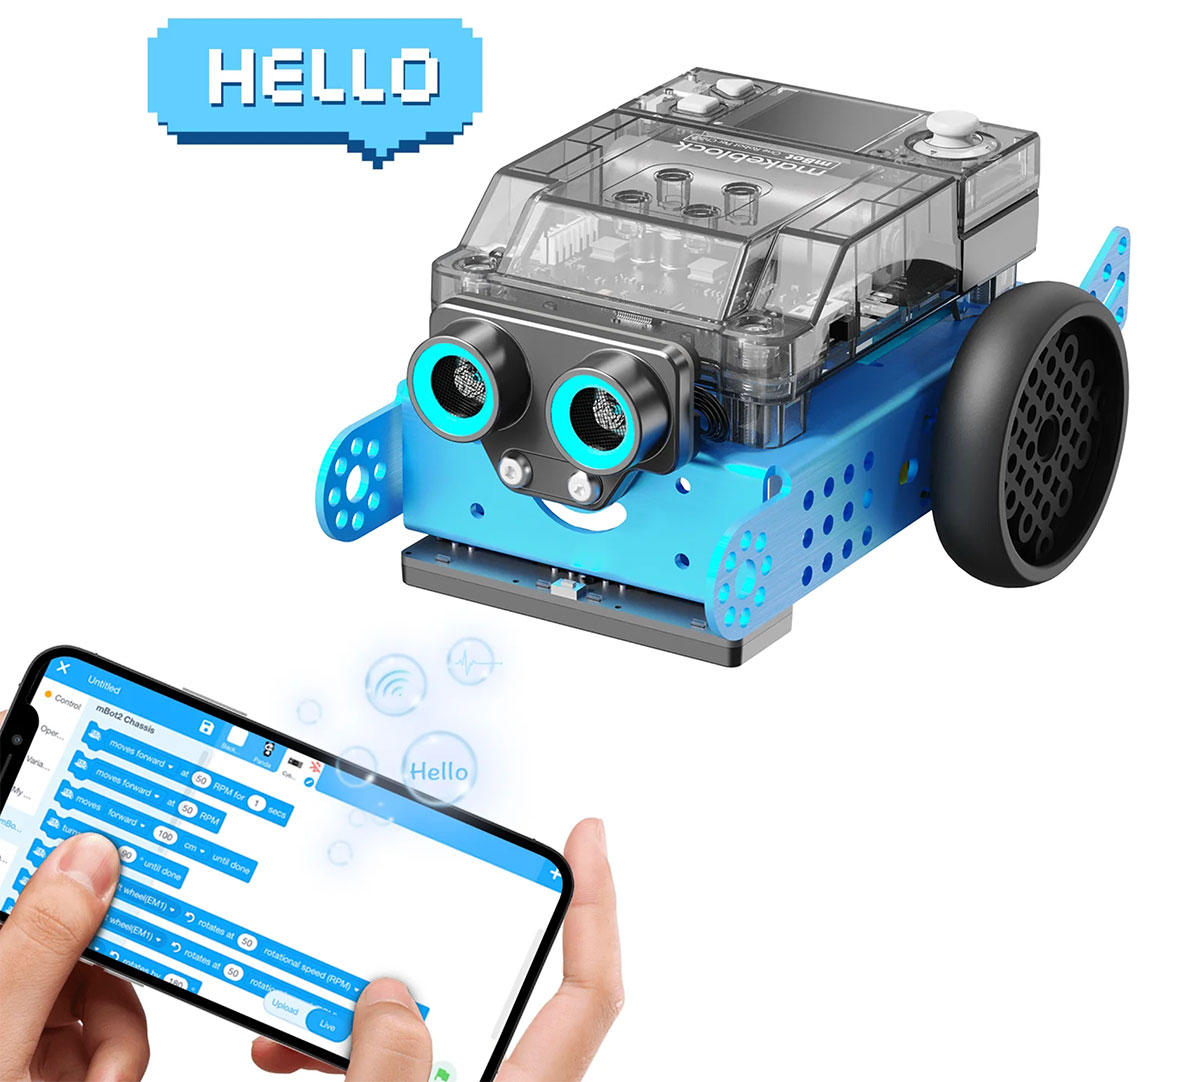 Makeblock mBot Neo Robot Kit - expanding range of codable robots